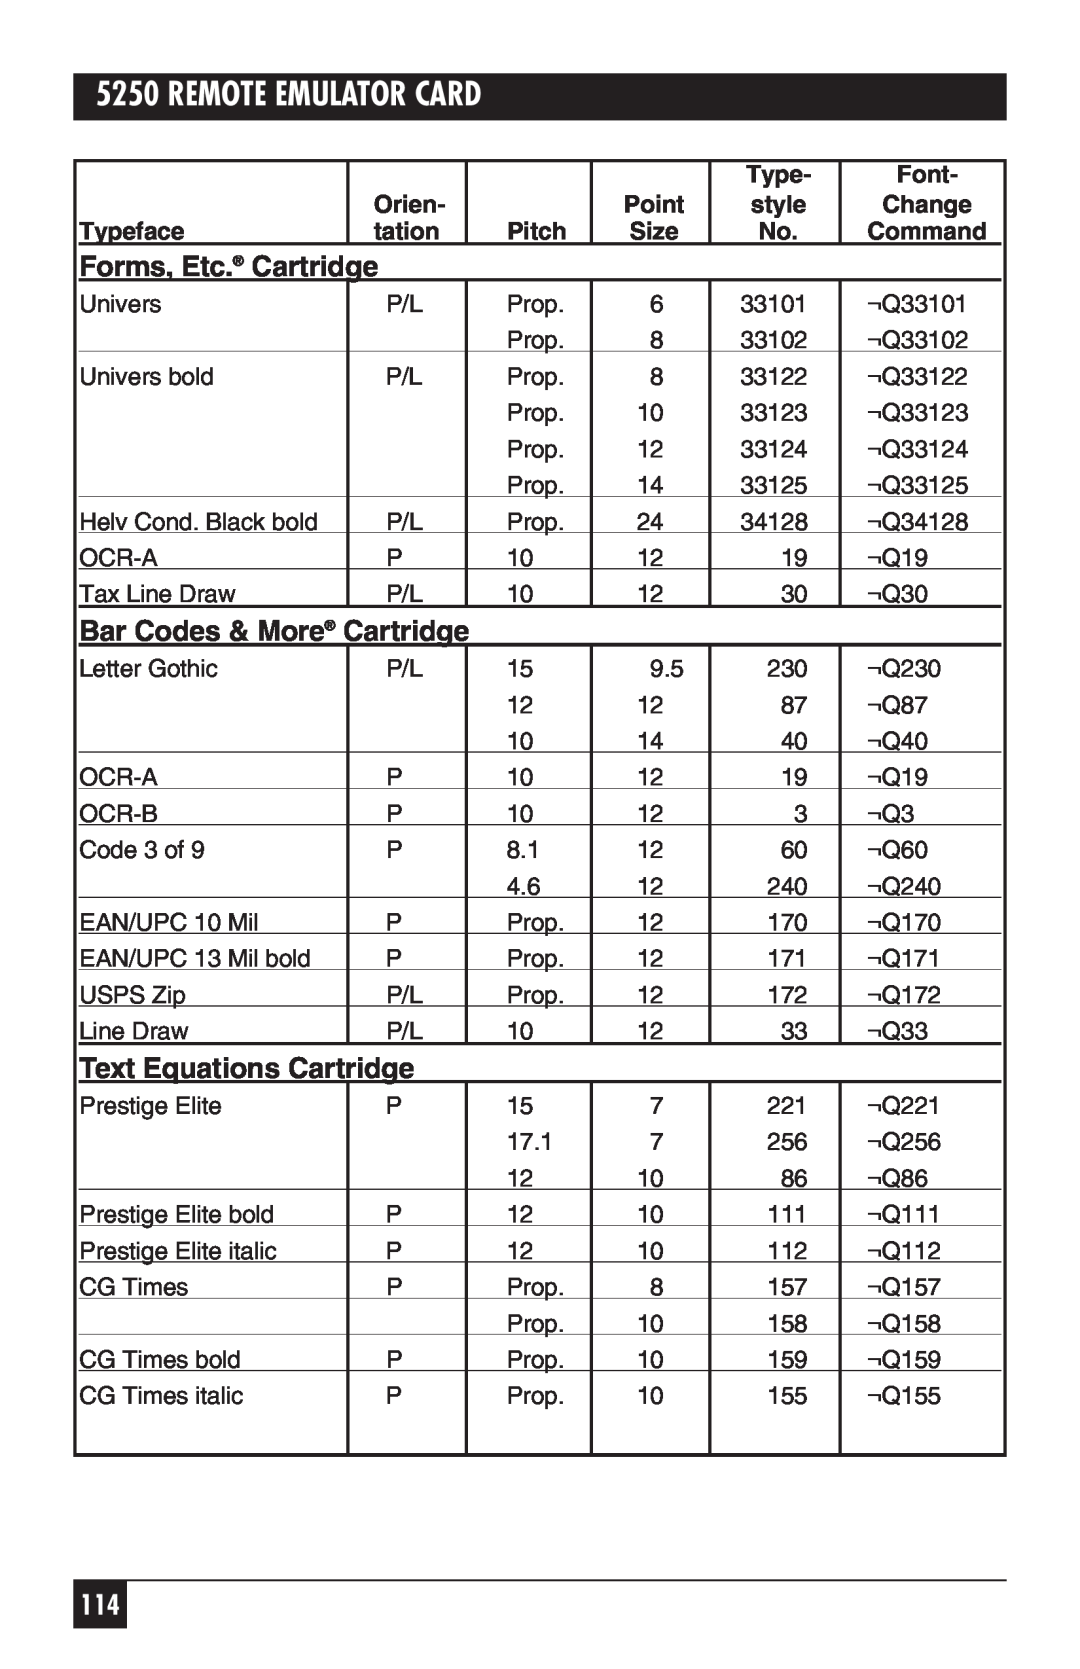 Black Box 5250 manual Remote Emulator Card, Forms, Etc. Cartridge, Bar Codes & More Cartridge, Text Equations Cartridge 